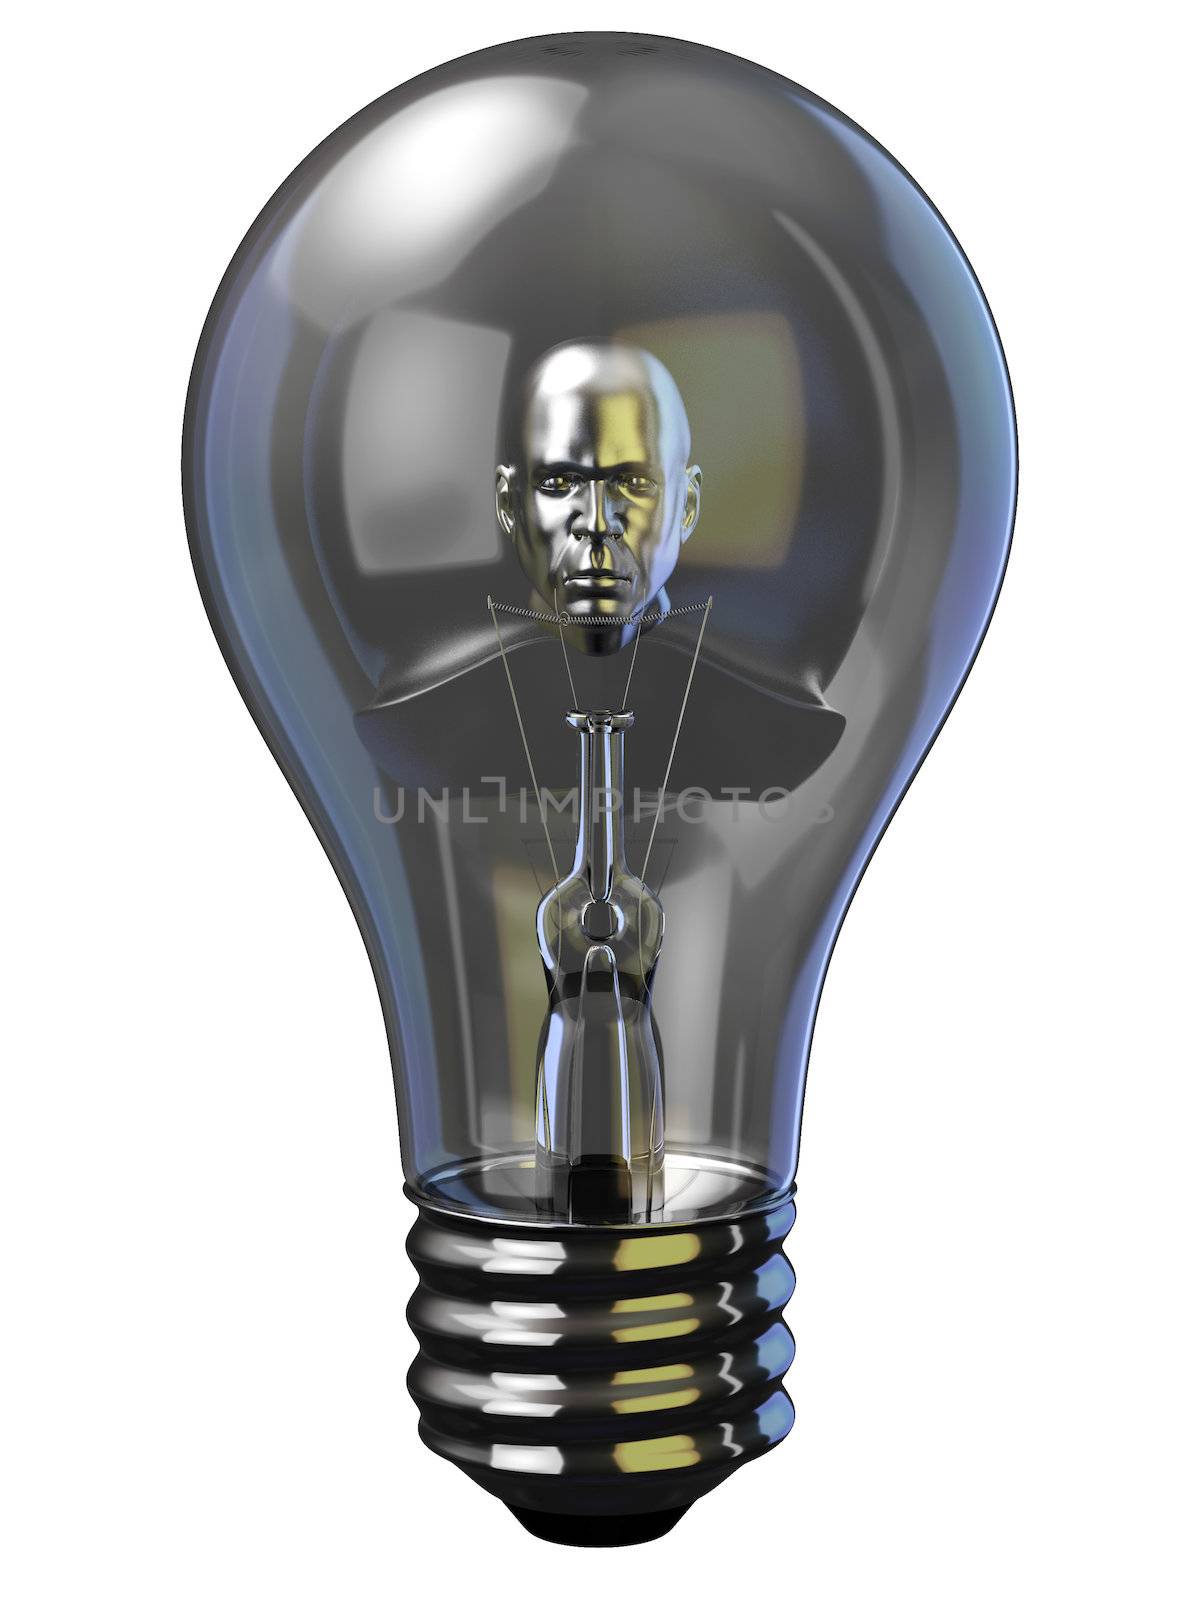 Man in Light bulb by truelight